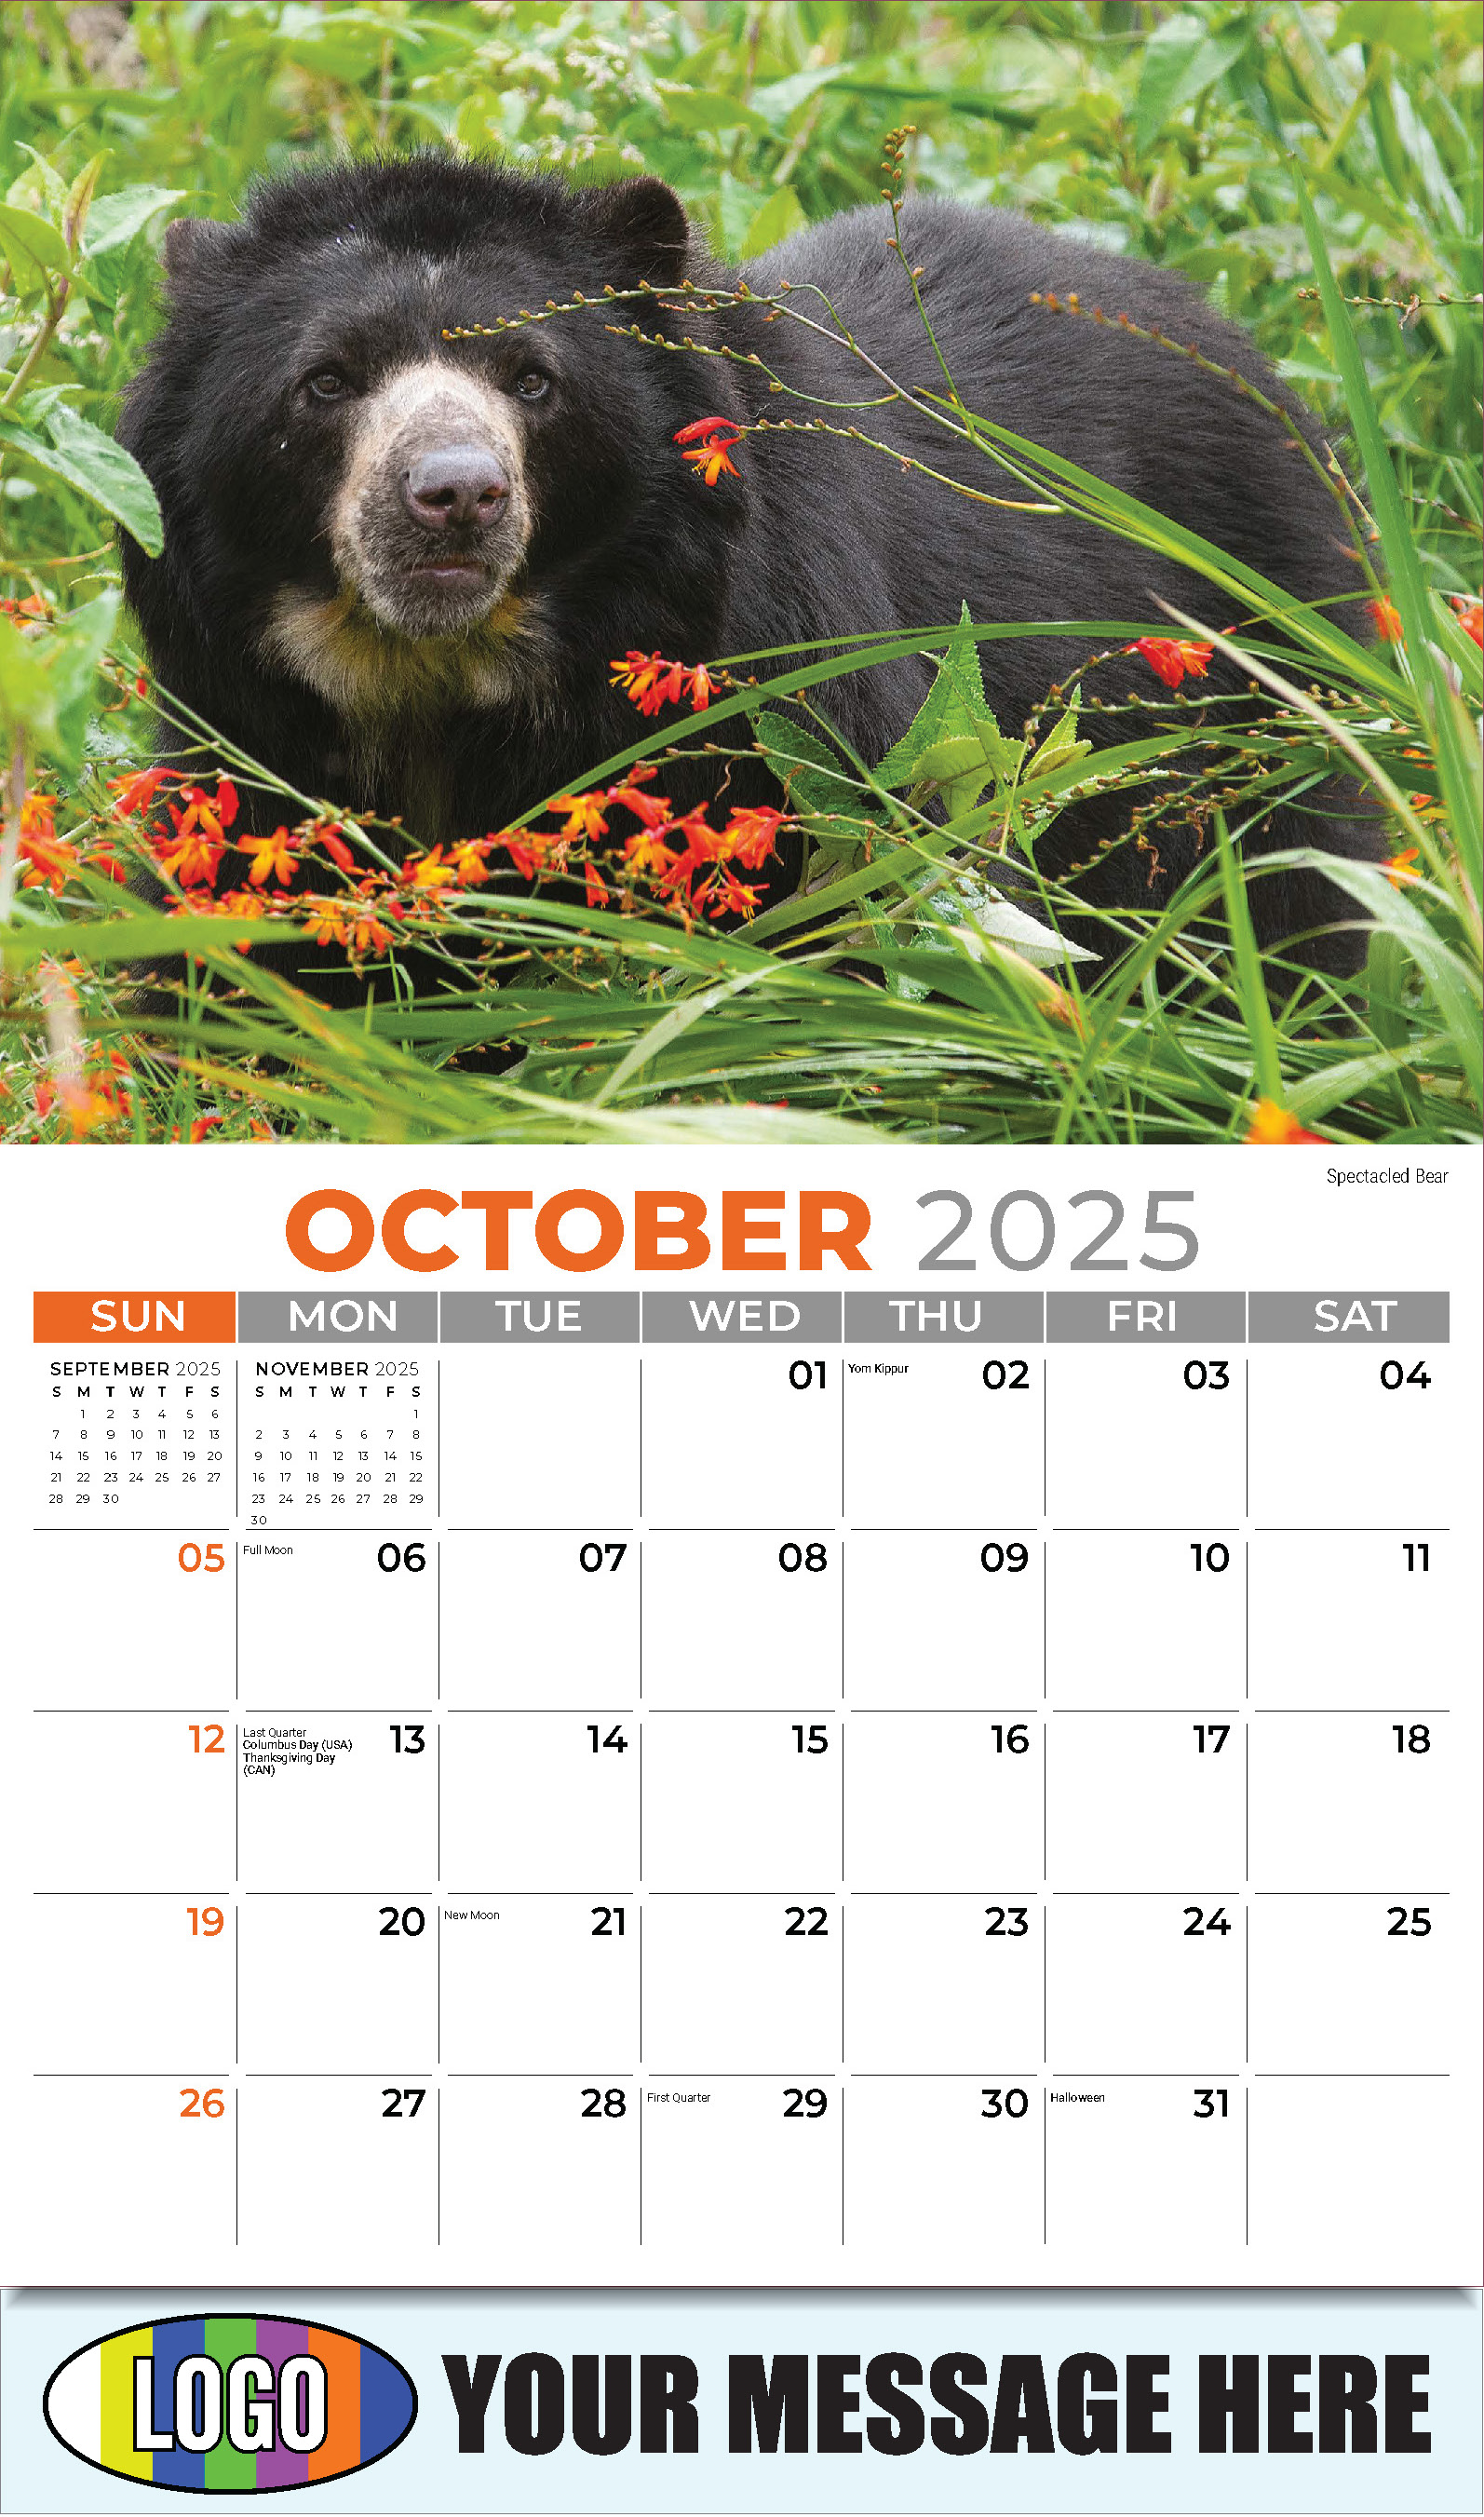 International Wildlife 2025 Business Advertising Wall Calendar - October